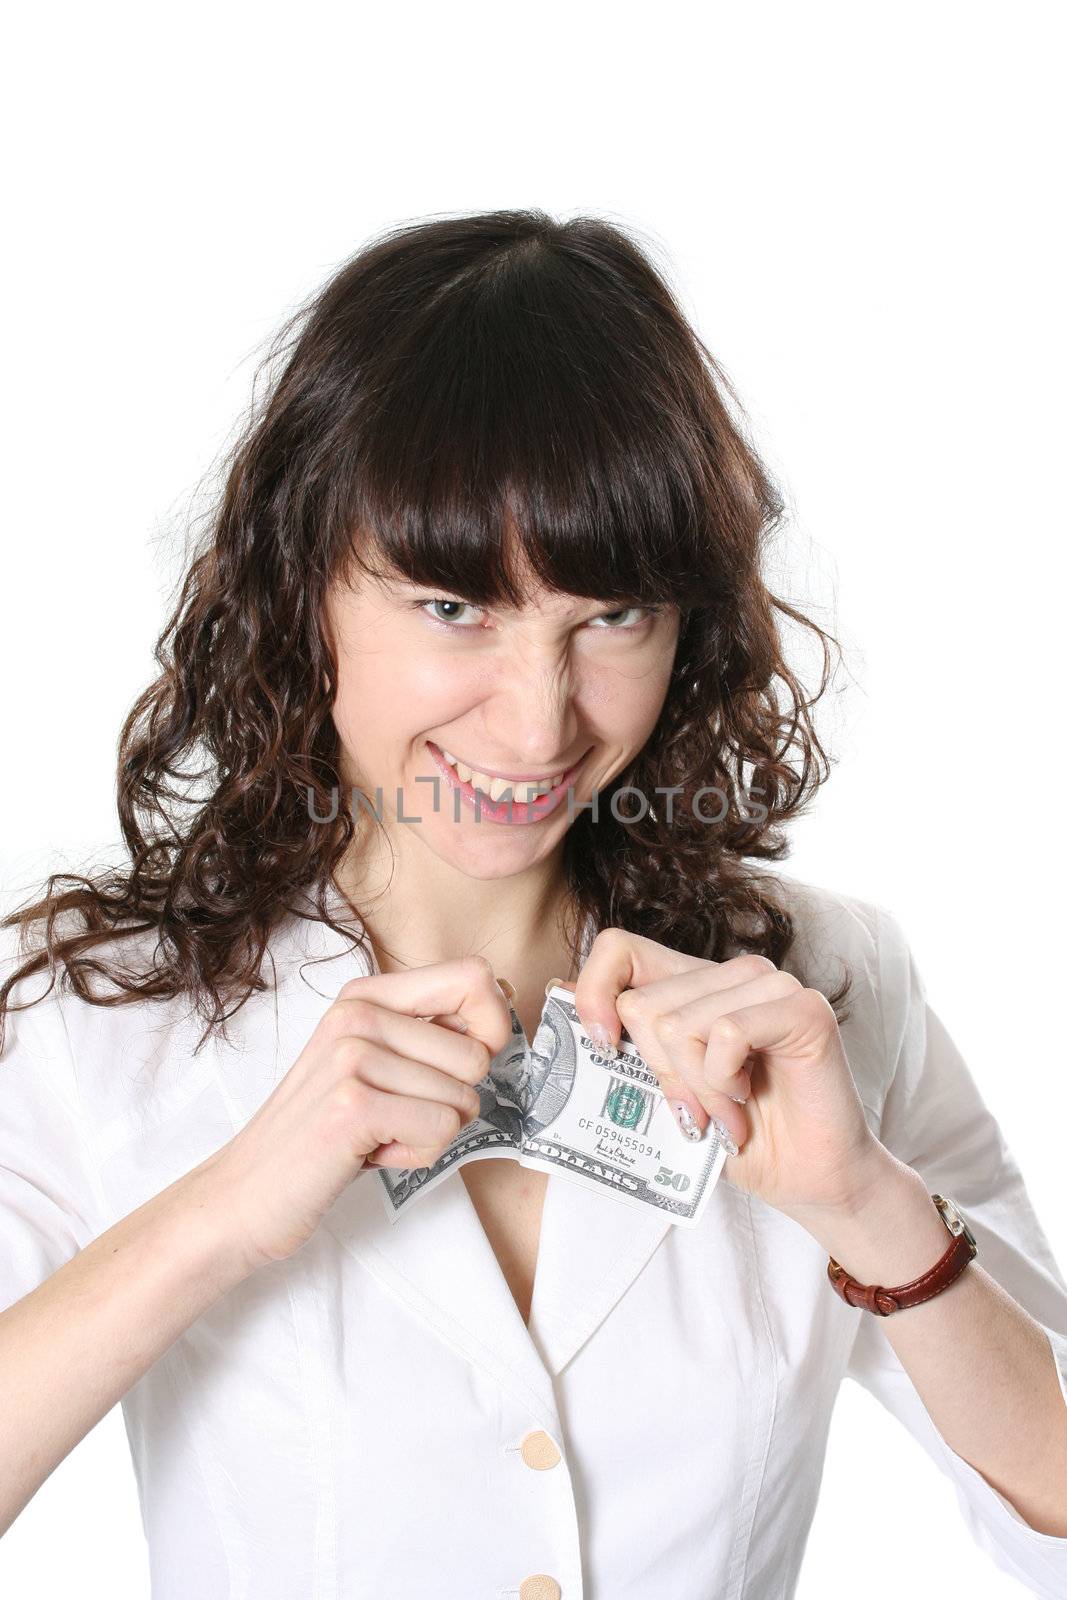 The nice woman tears 50 dollar denomination